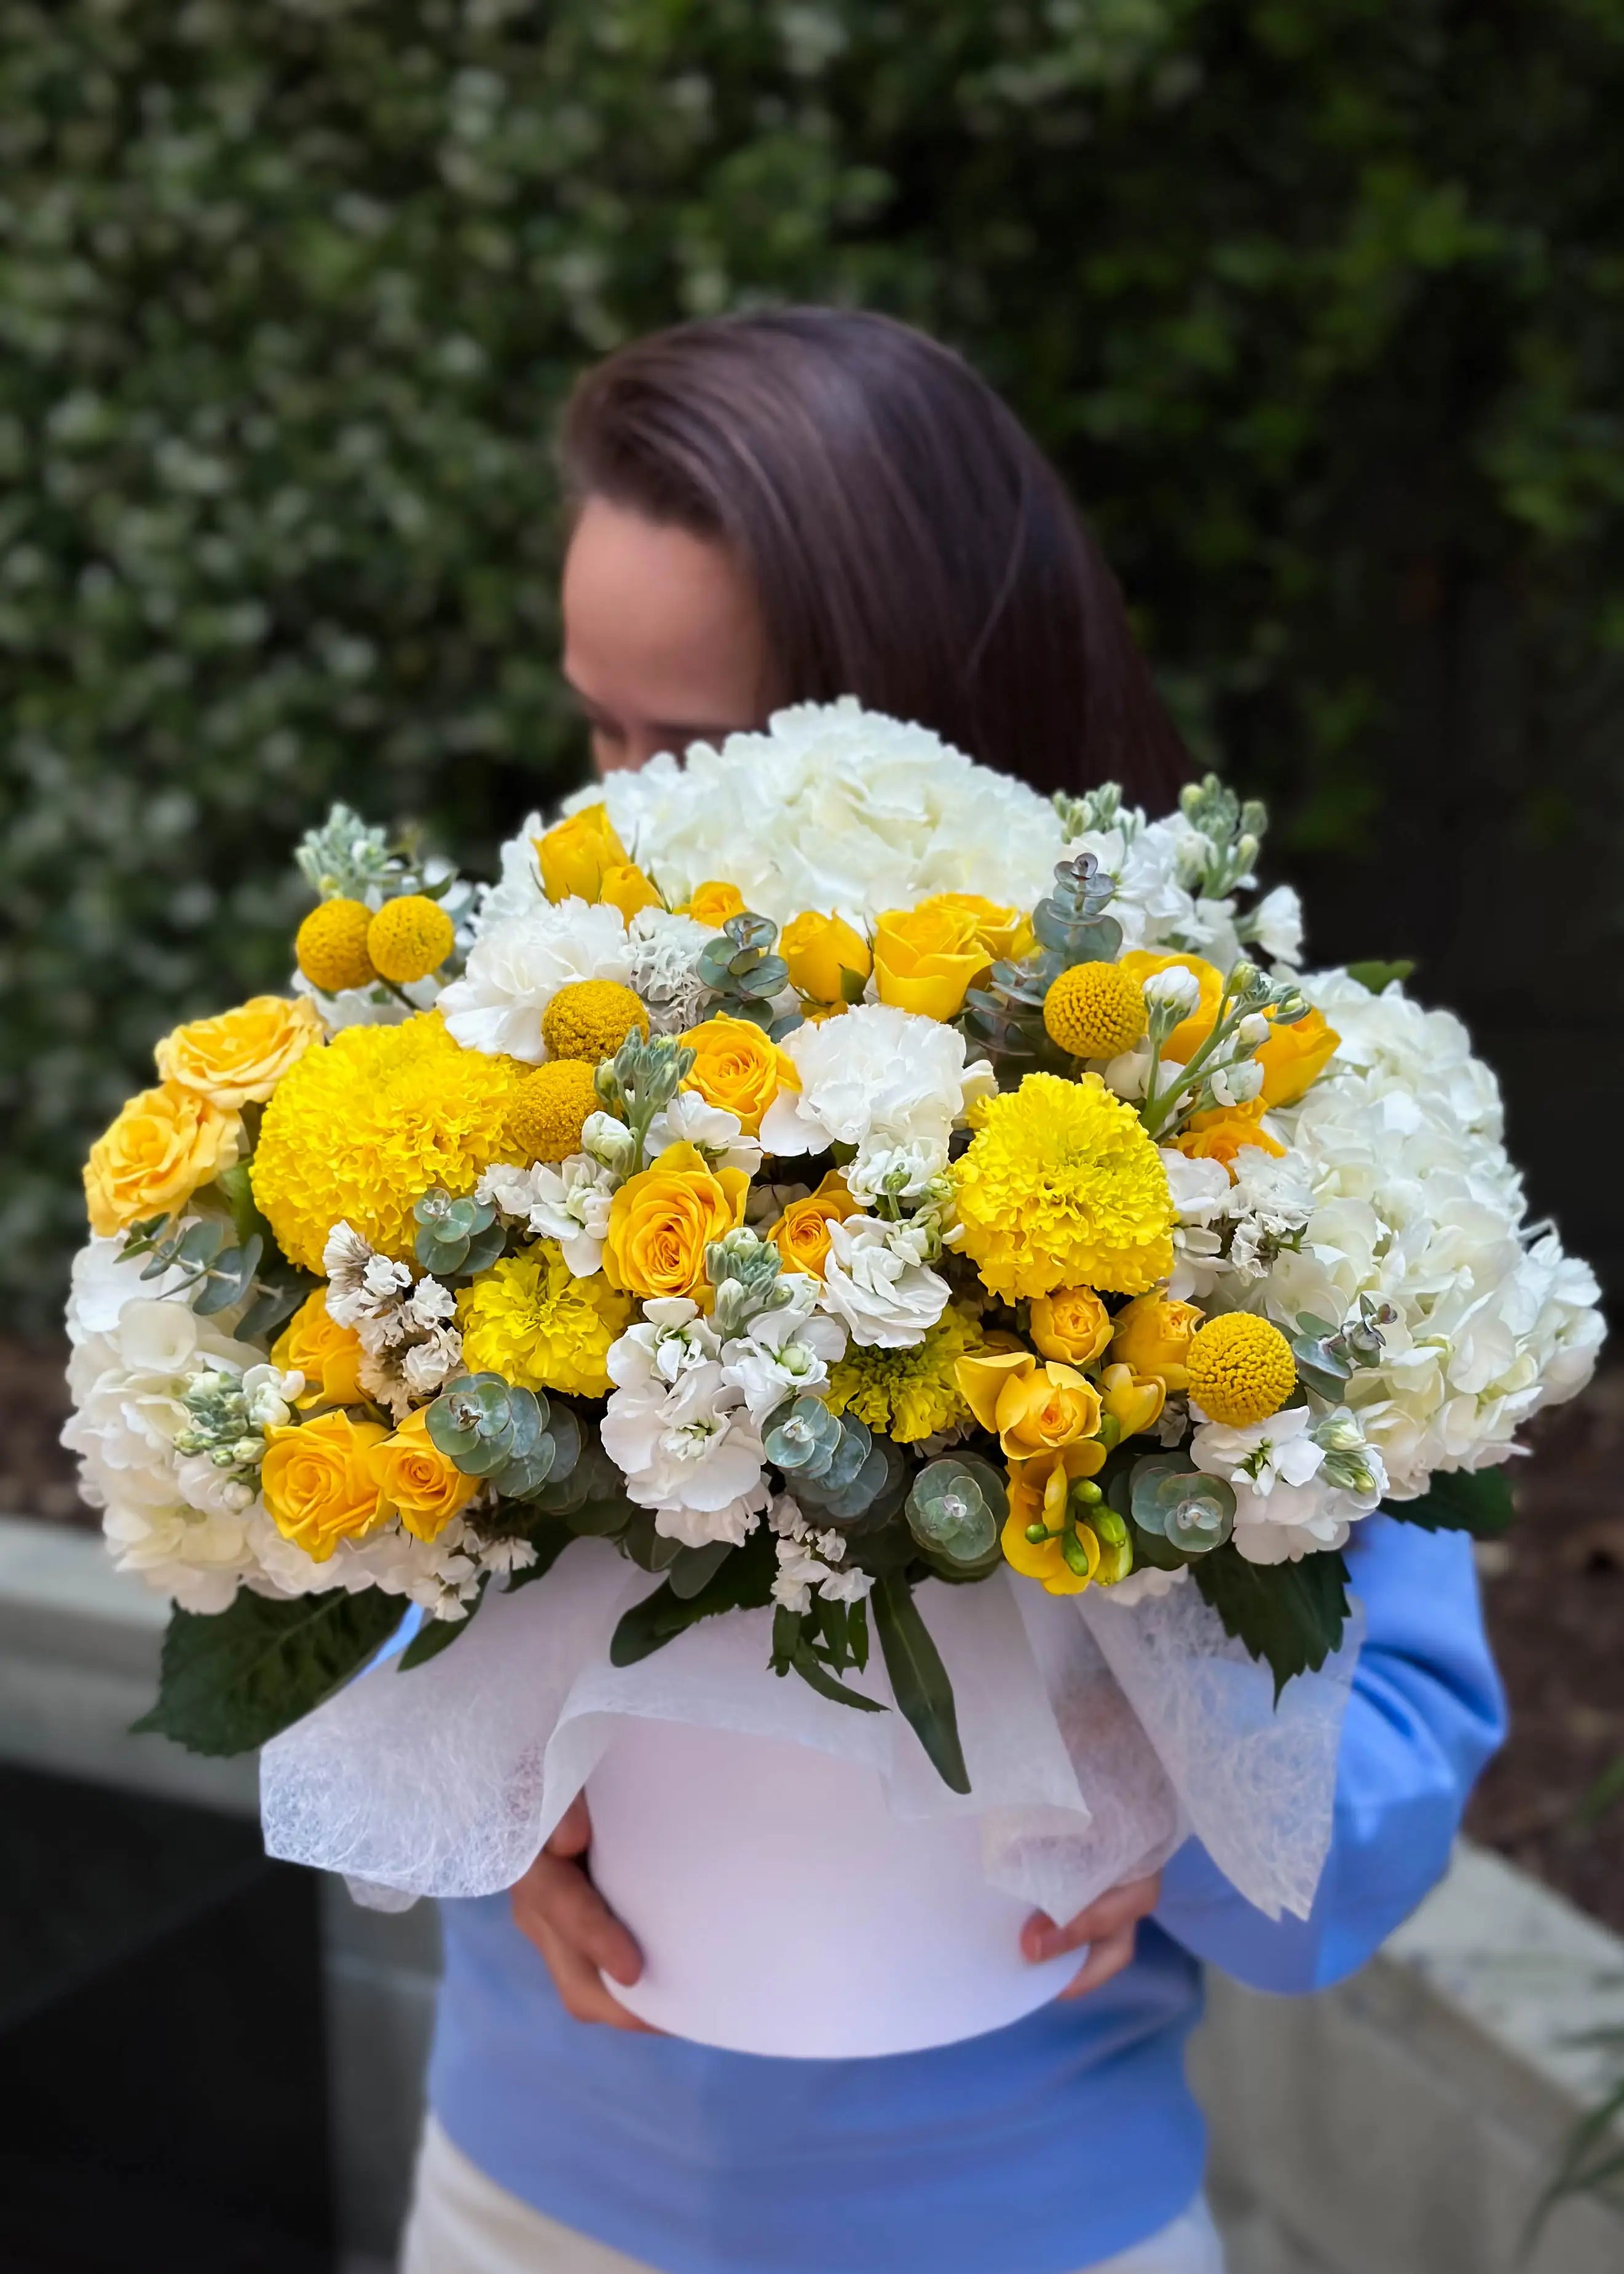 NO. 13. Sunny Box (yellow roses, hydrangeas, eucaliptus)